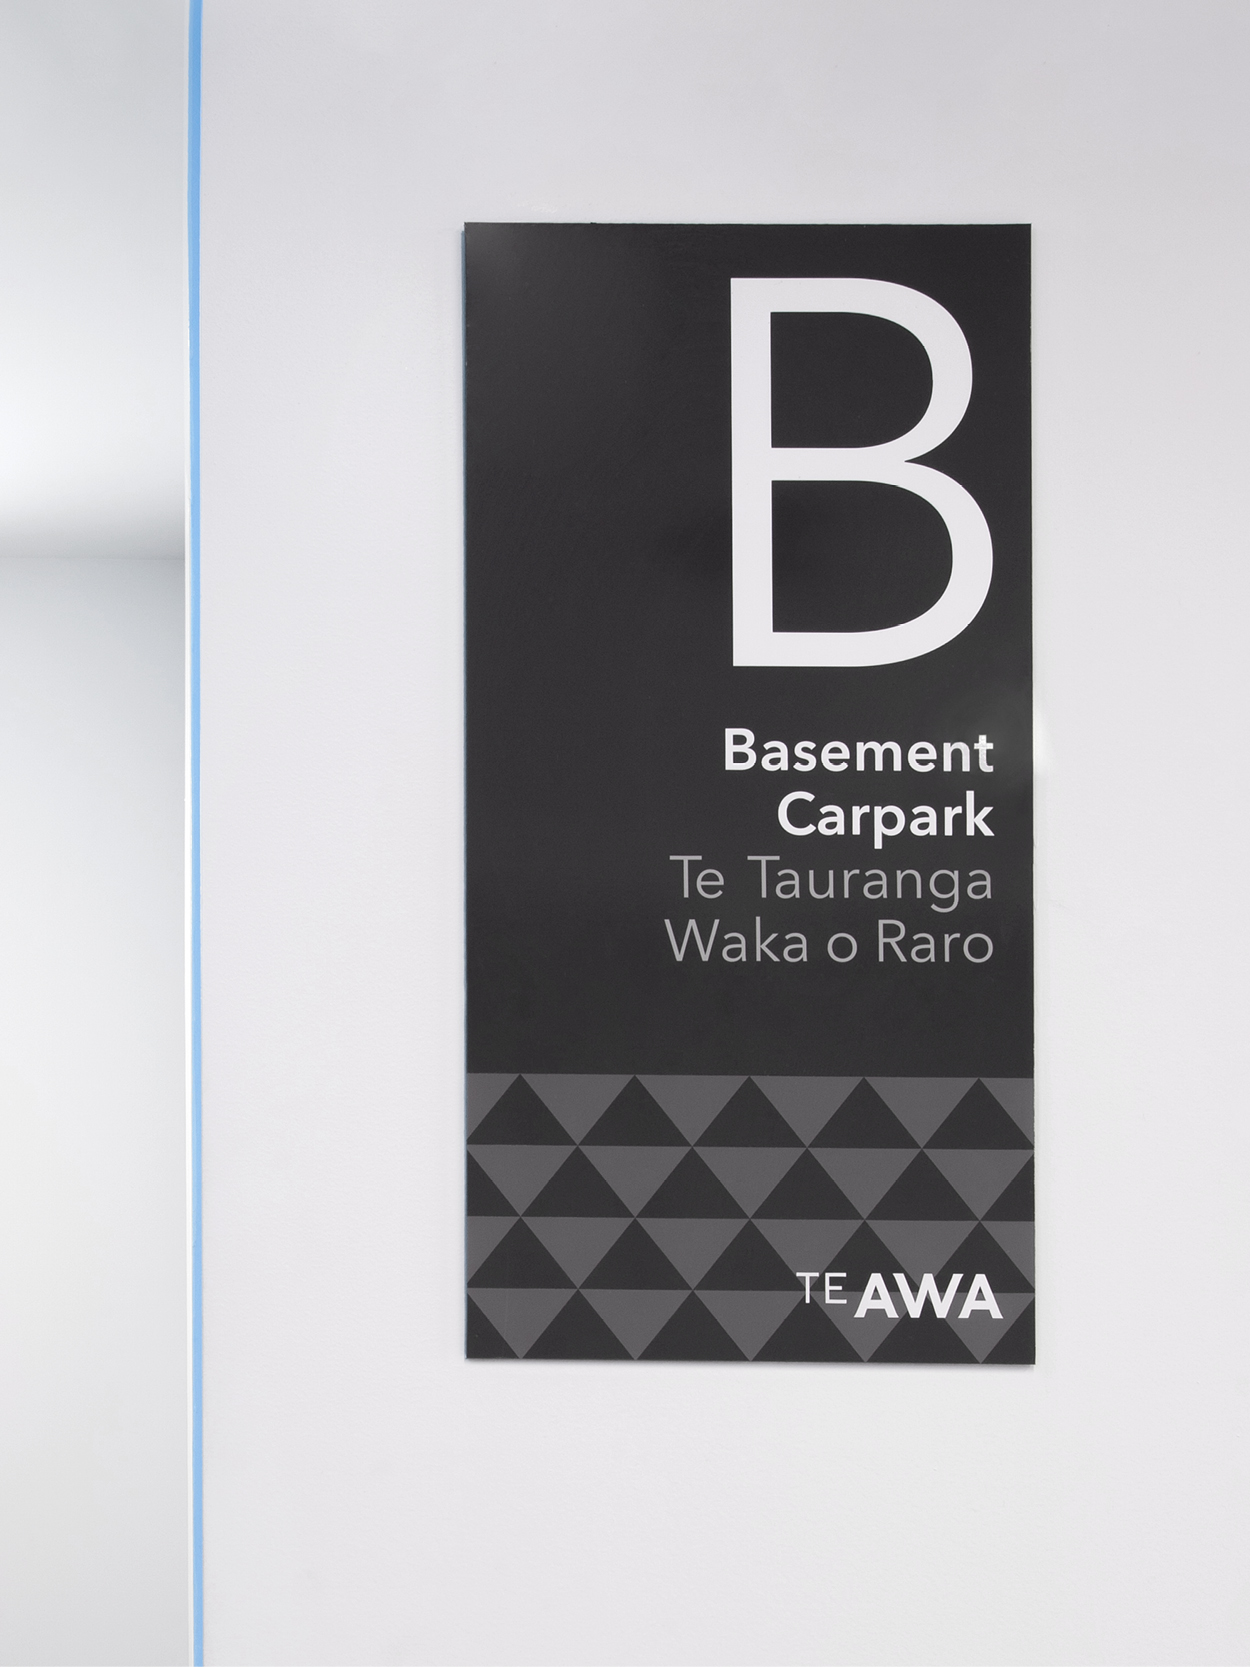 Wayfinding signage in Te Awa's carpark